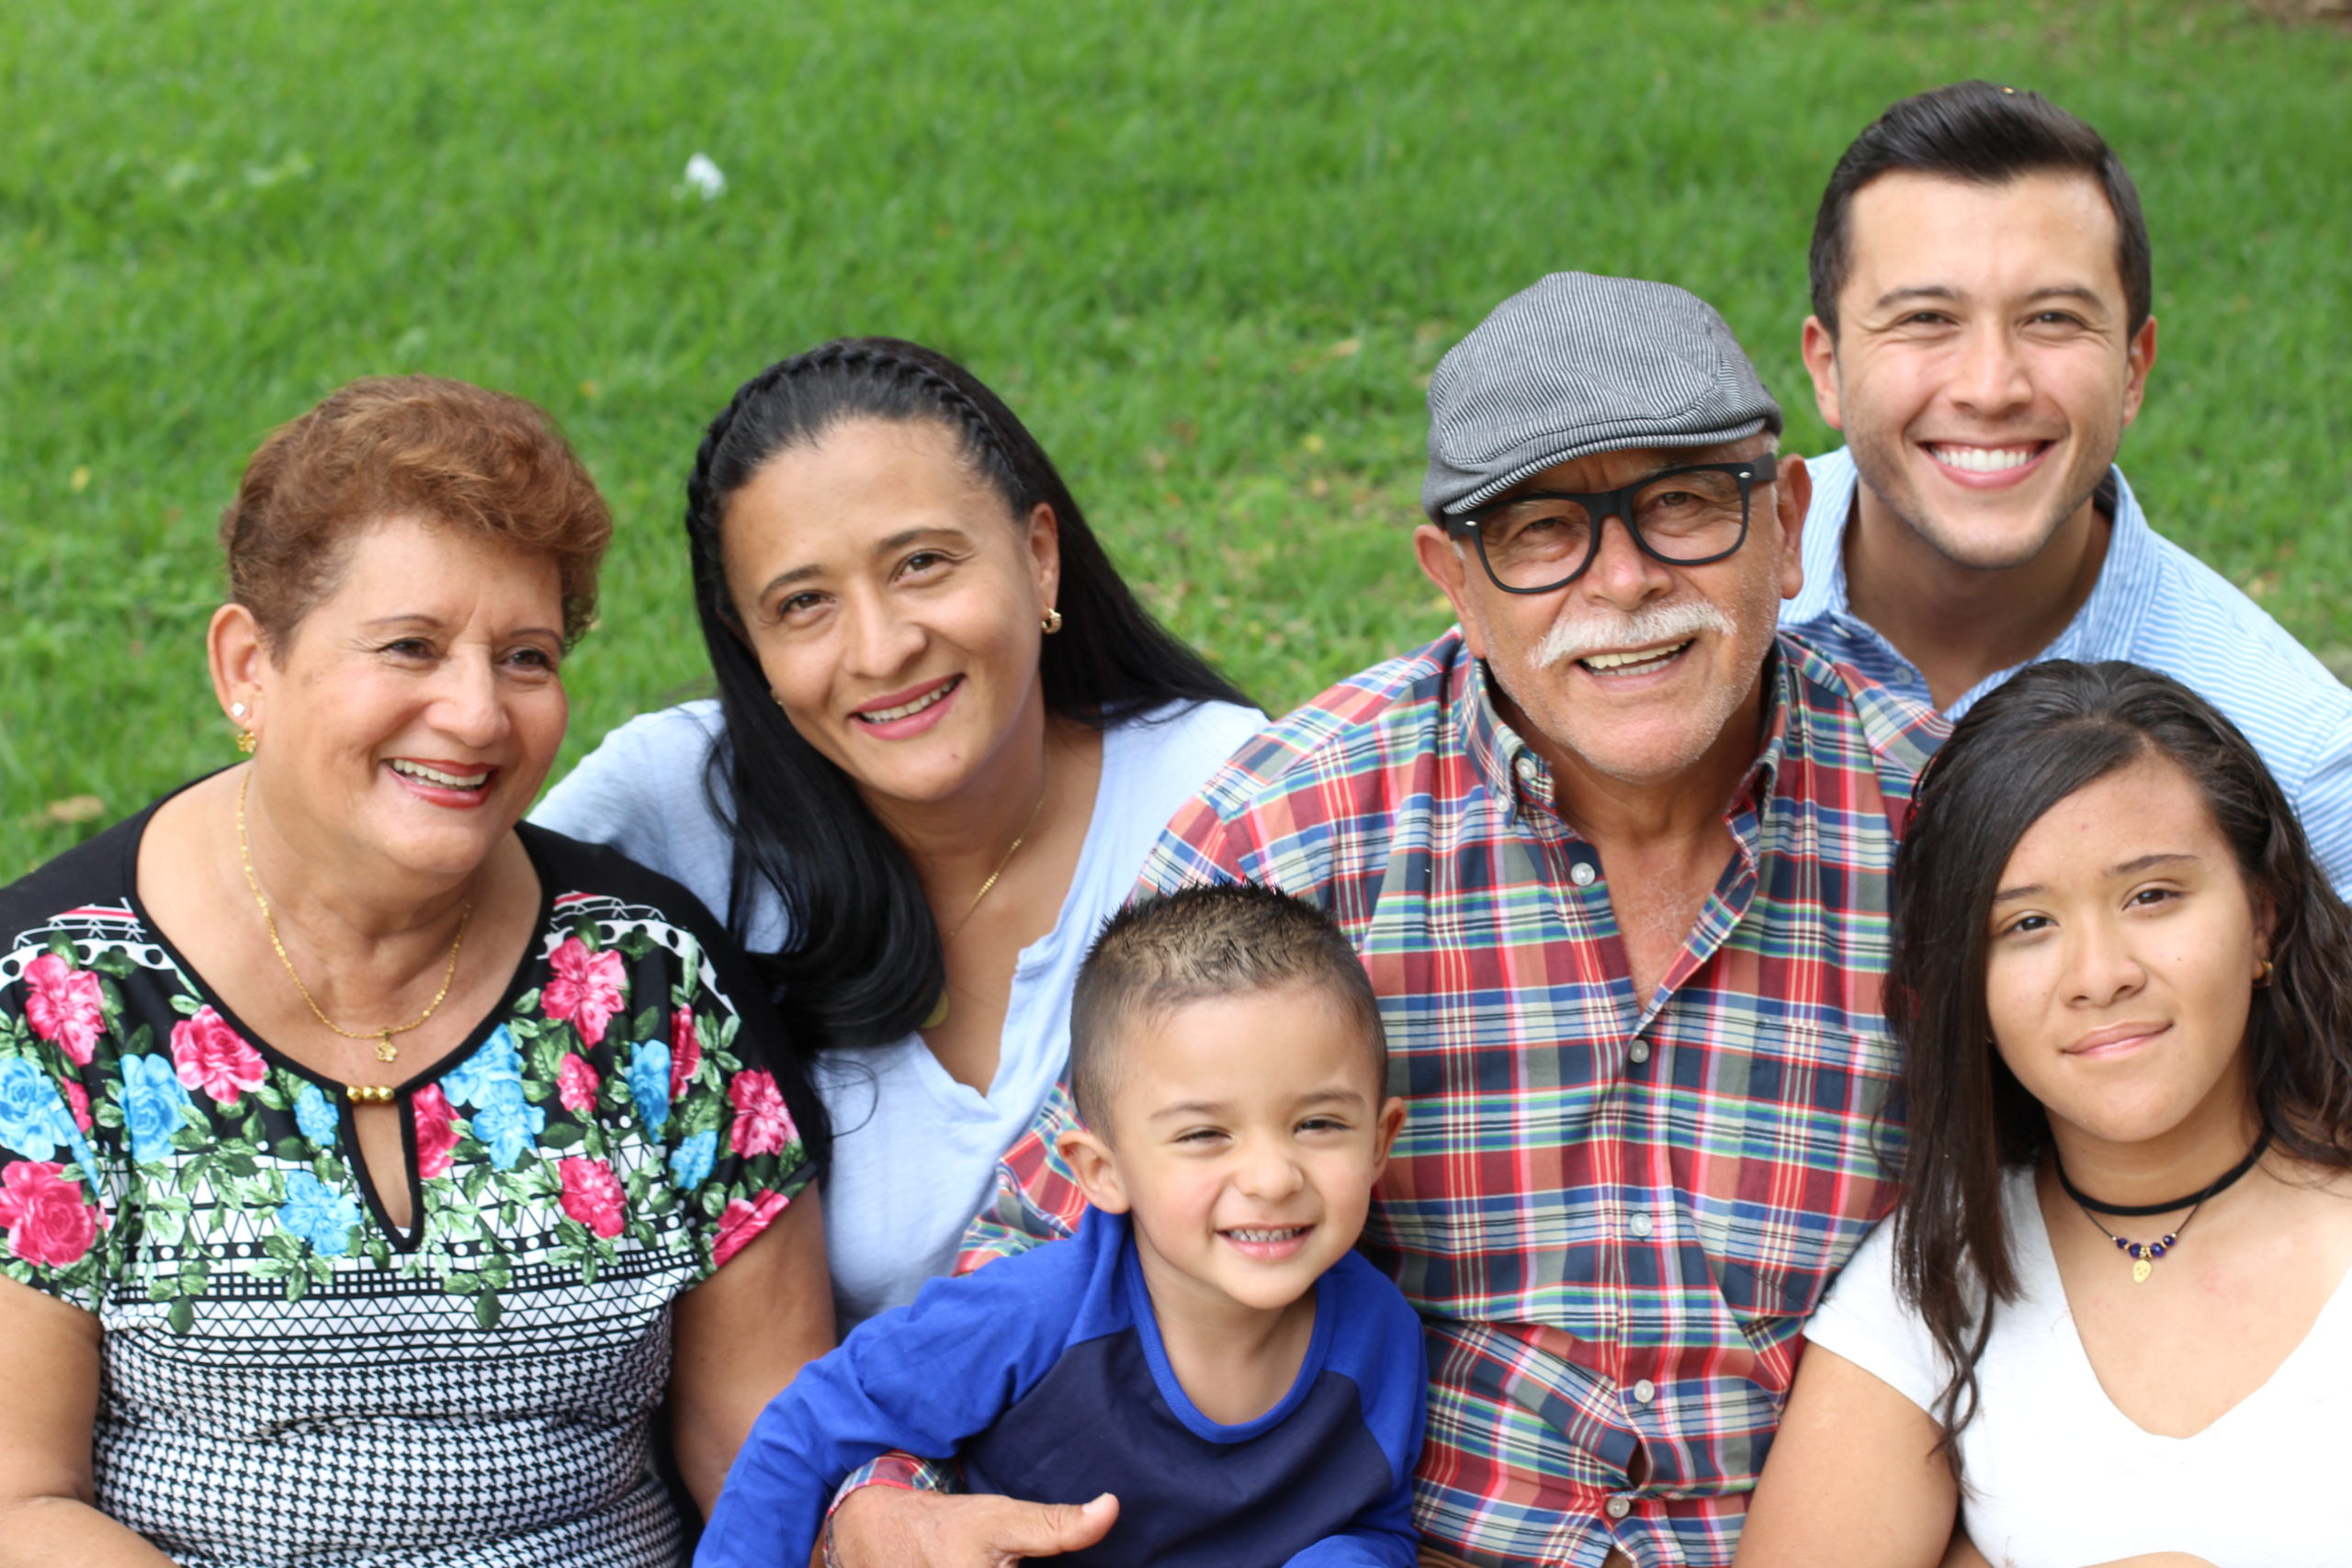 Hispanic family with good values